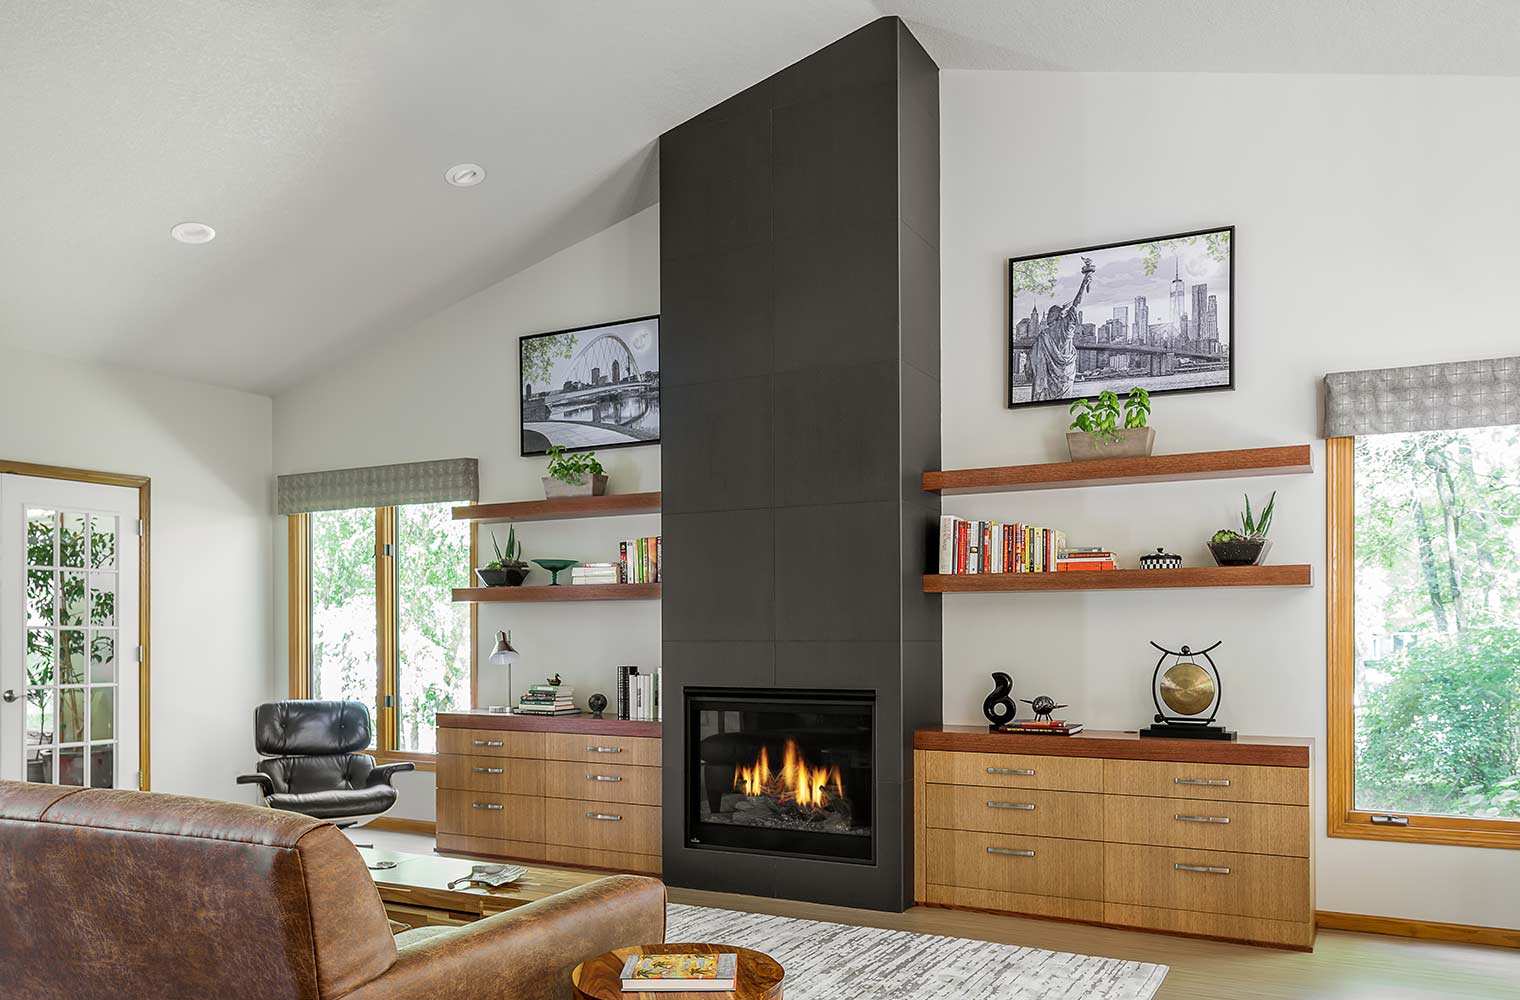 Fireplace Design Ideas Hot Ways To, Shelves Around Fireplace Ideas